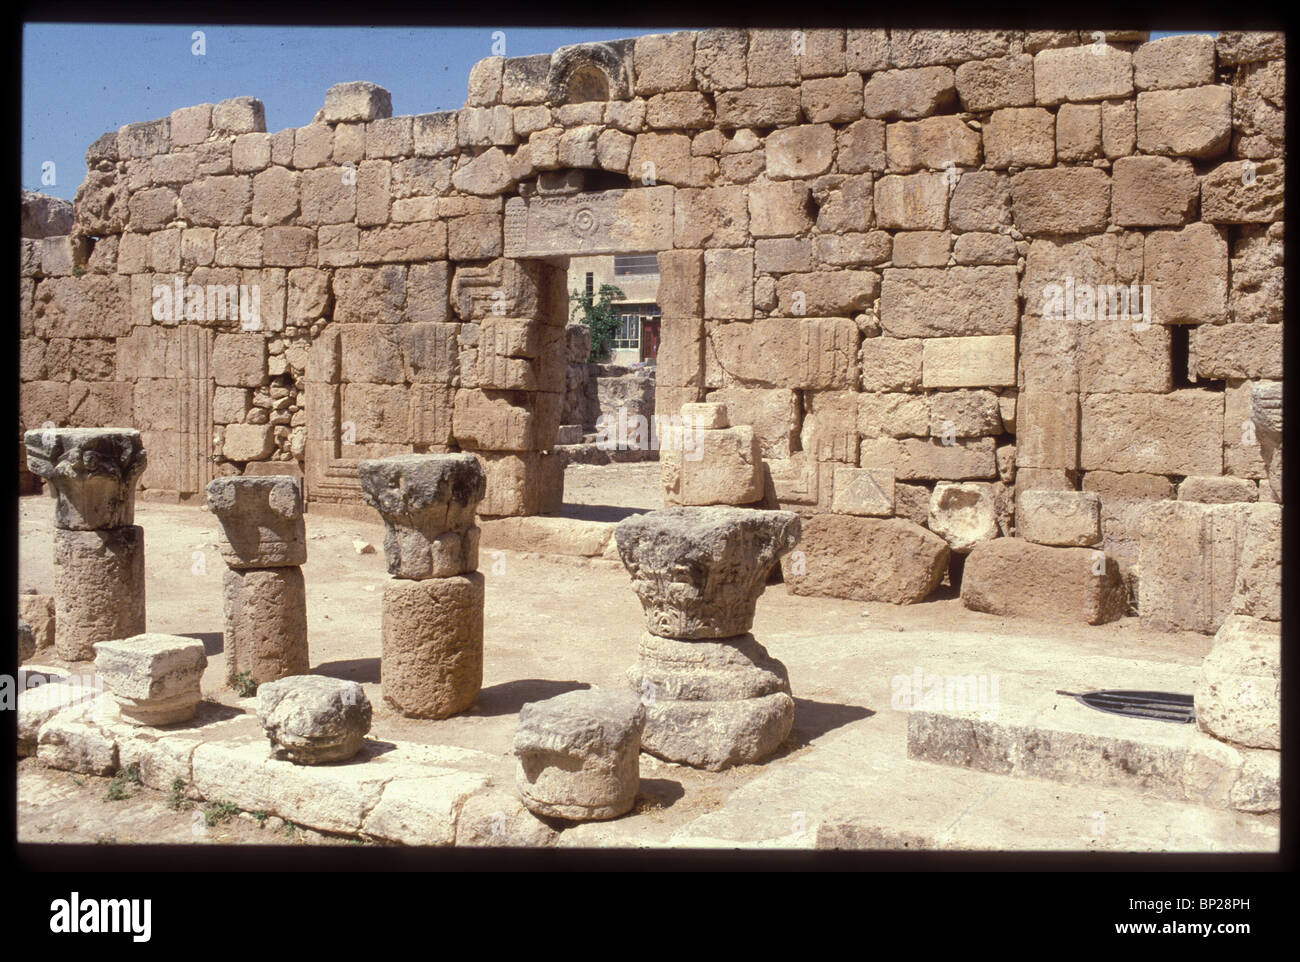 2267. ESHTAMOA SYNAGOGUE DATING FROM THE 5 - 6TH. C. A.D. LOCATED IN THE VILLAGE OF ESHTAMOA NEAR HEBRON Stock Photo